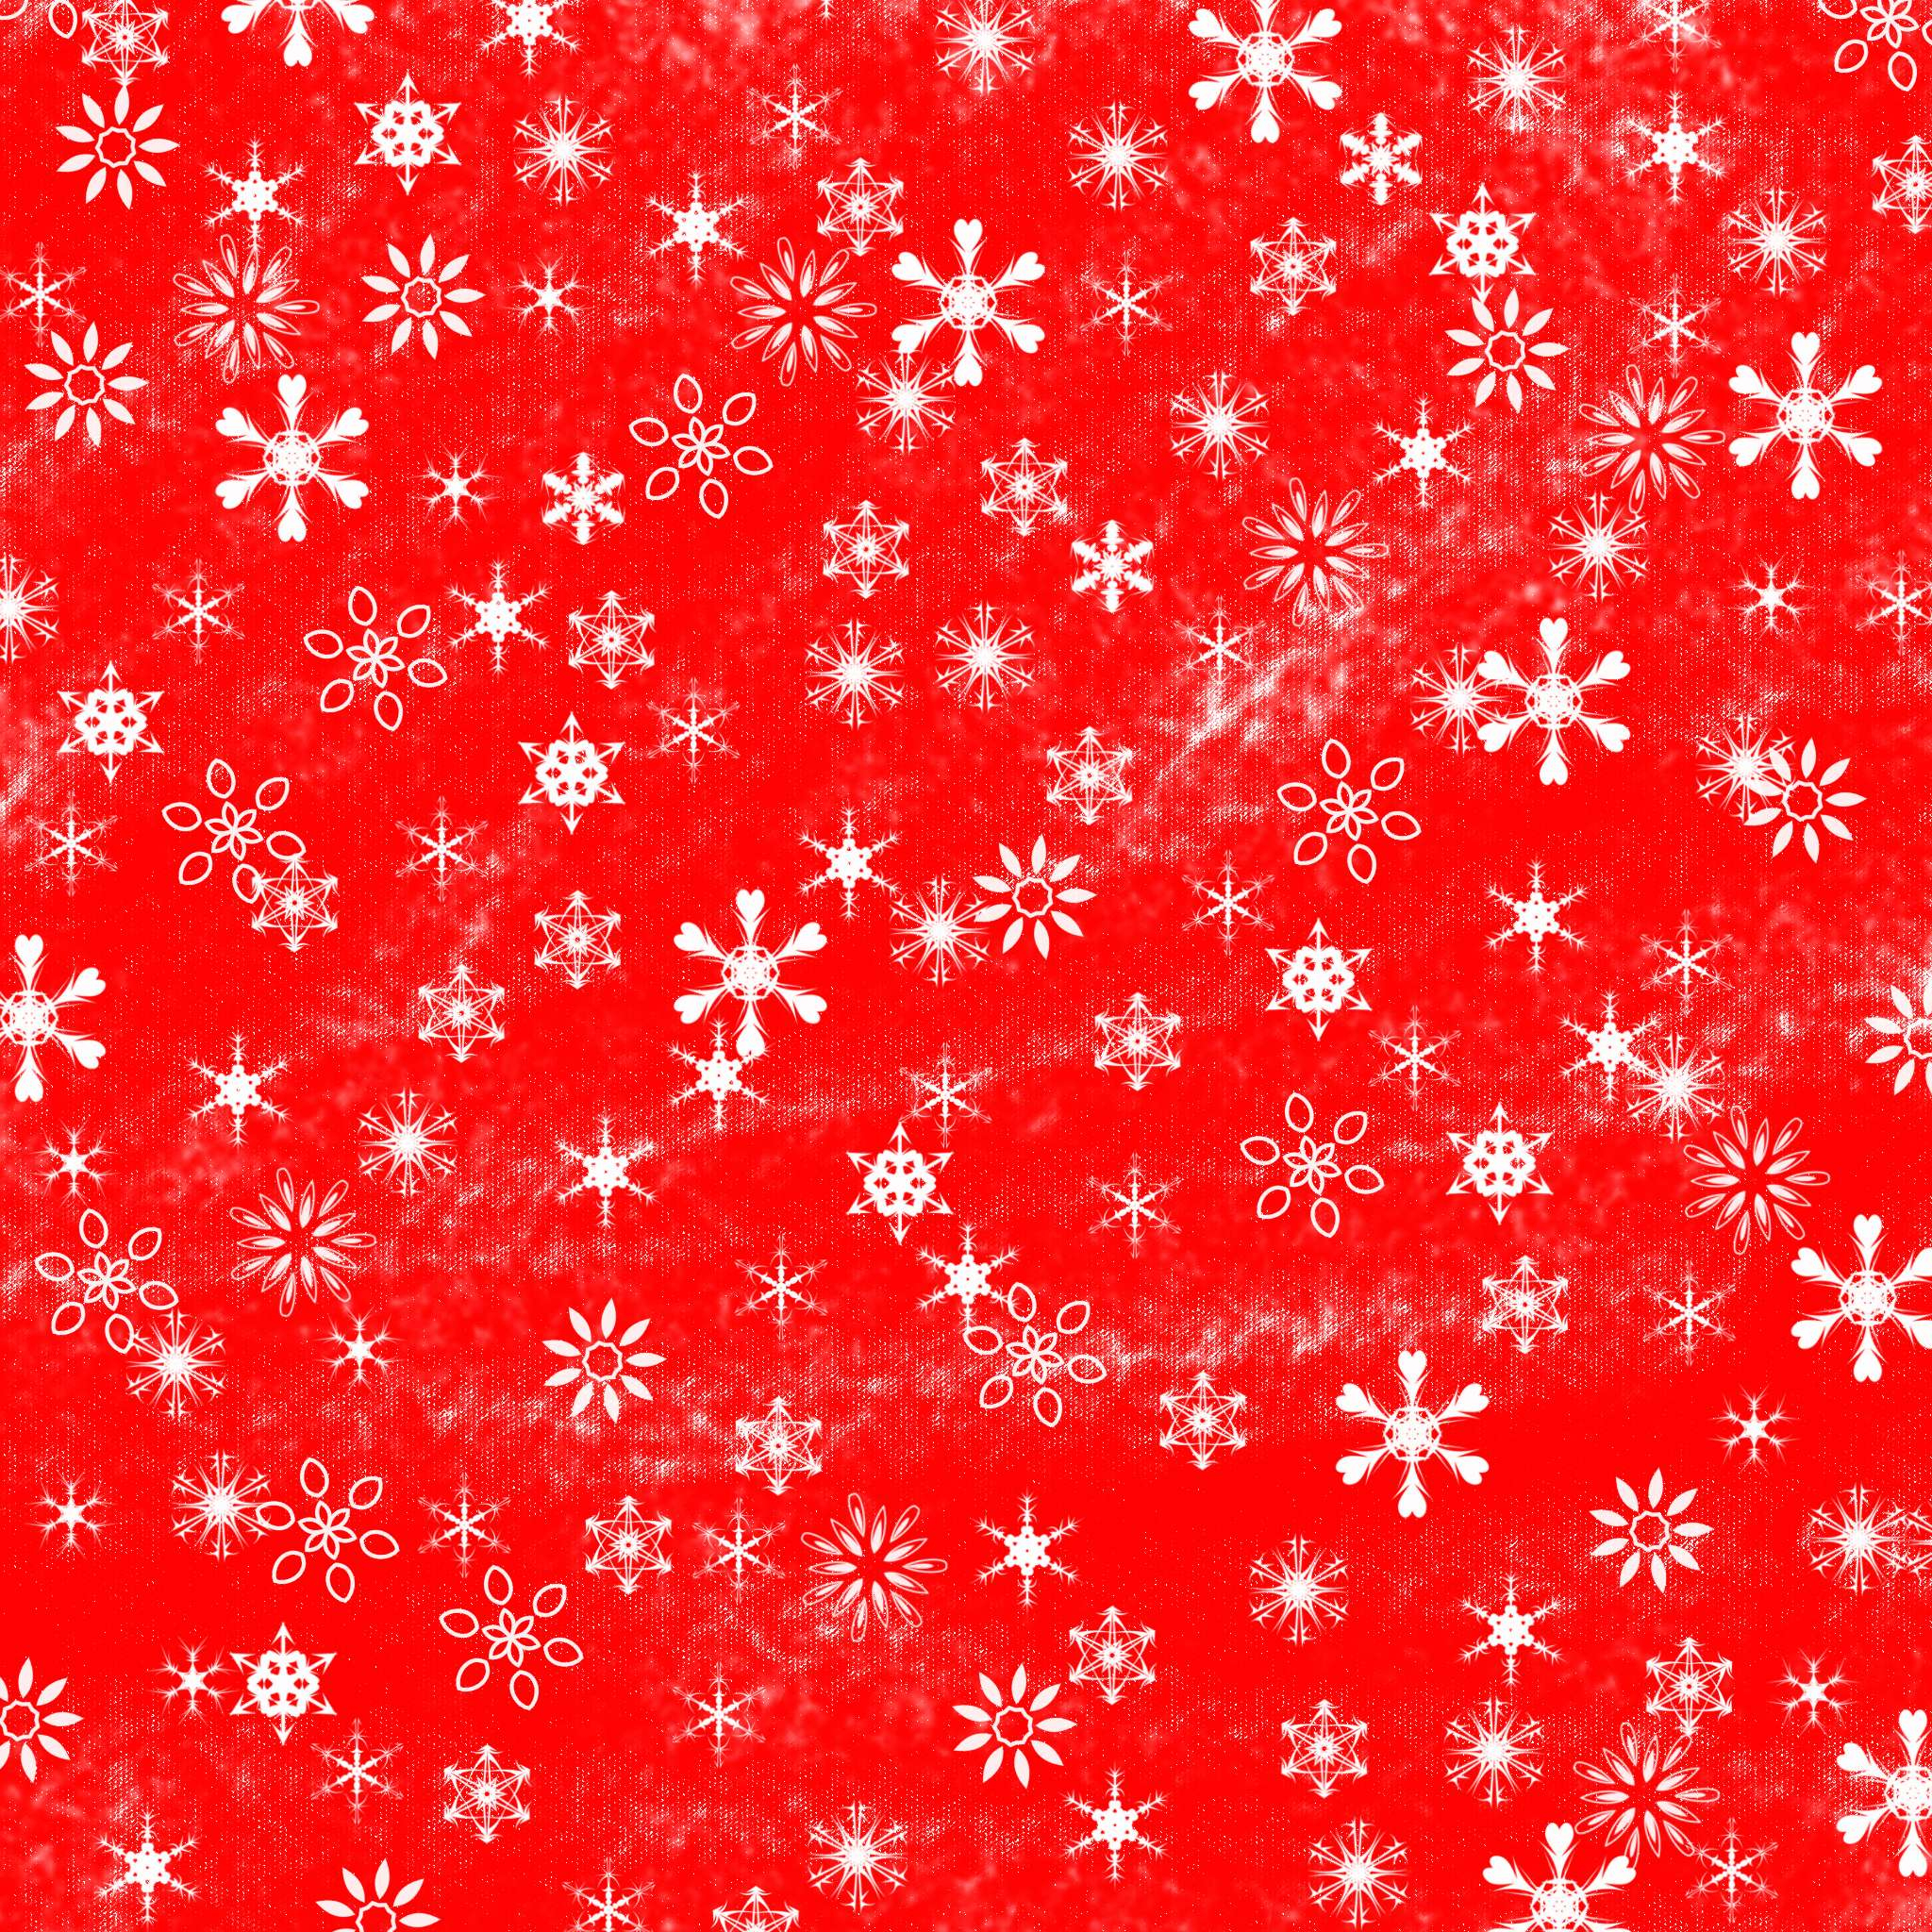 Free Printable Christmas Backgrounds – Festival Collections - Free Printable Christmas Backgrounds